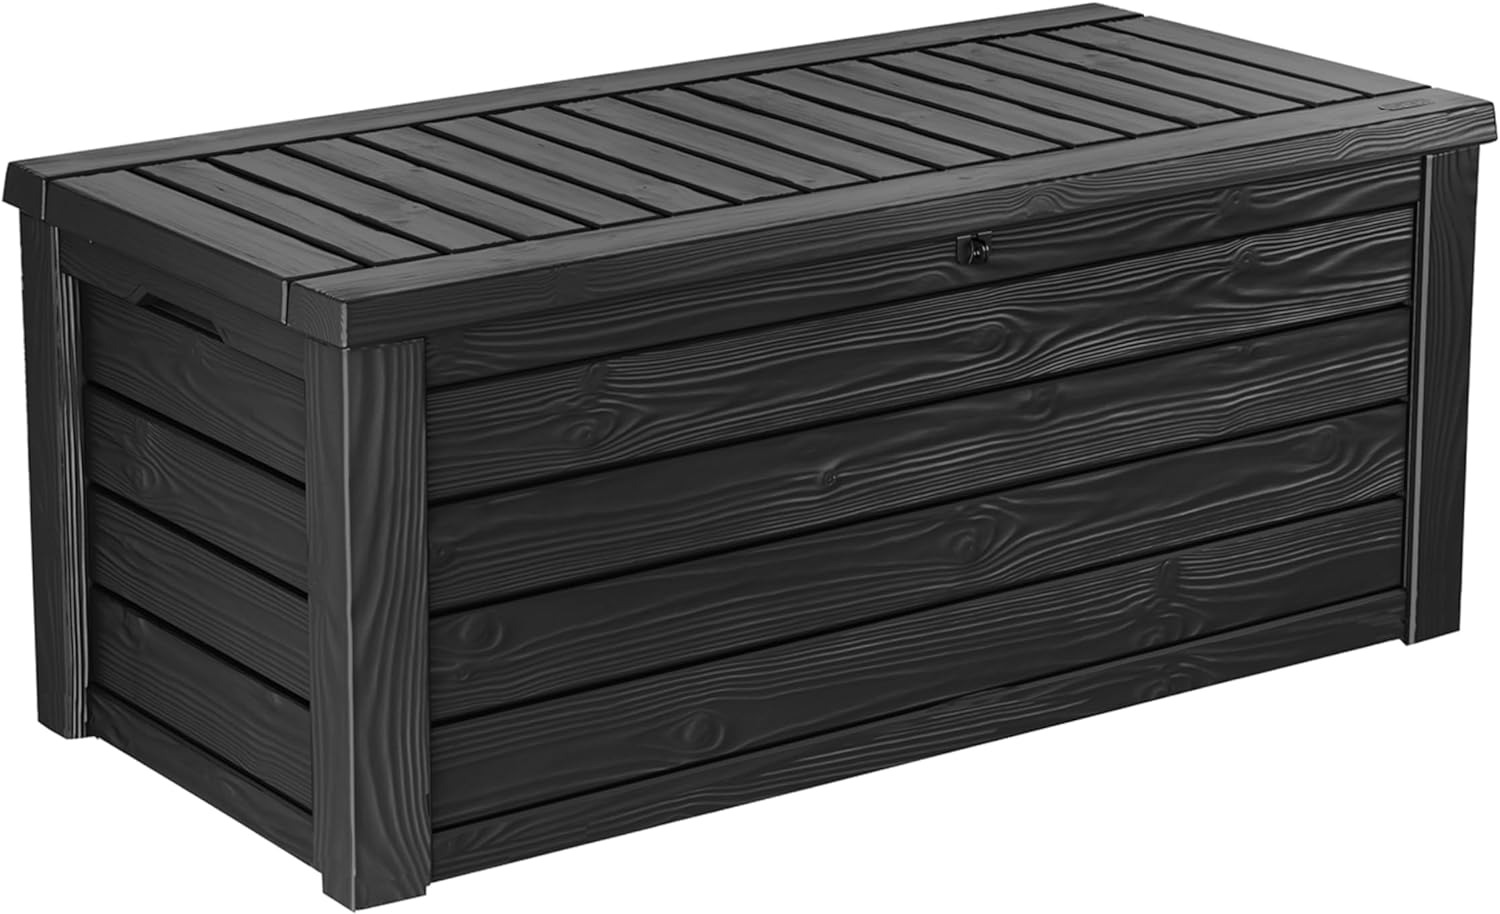 Westwood 150 Gal Plastic Outdoor Patio Deck Box for Backyard Decor Furniture 